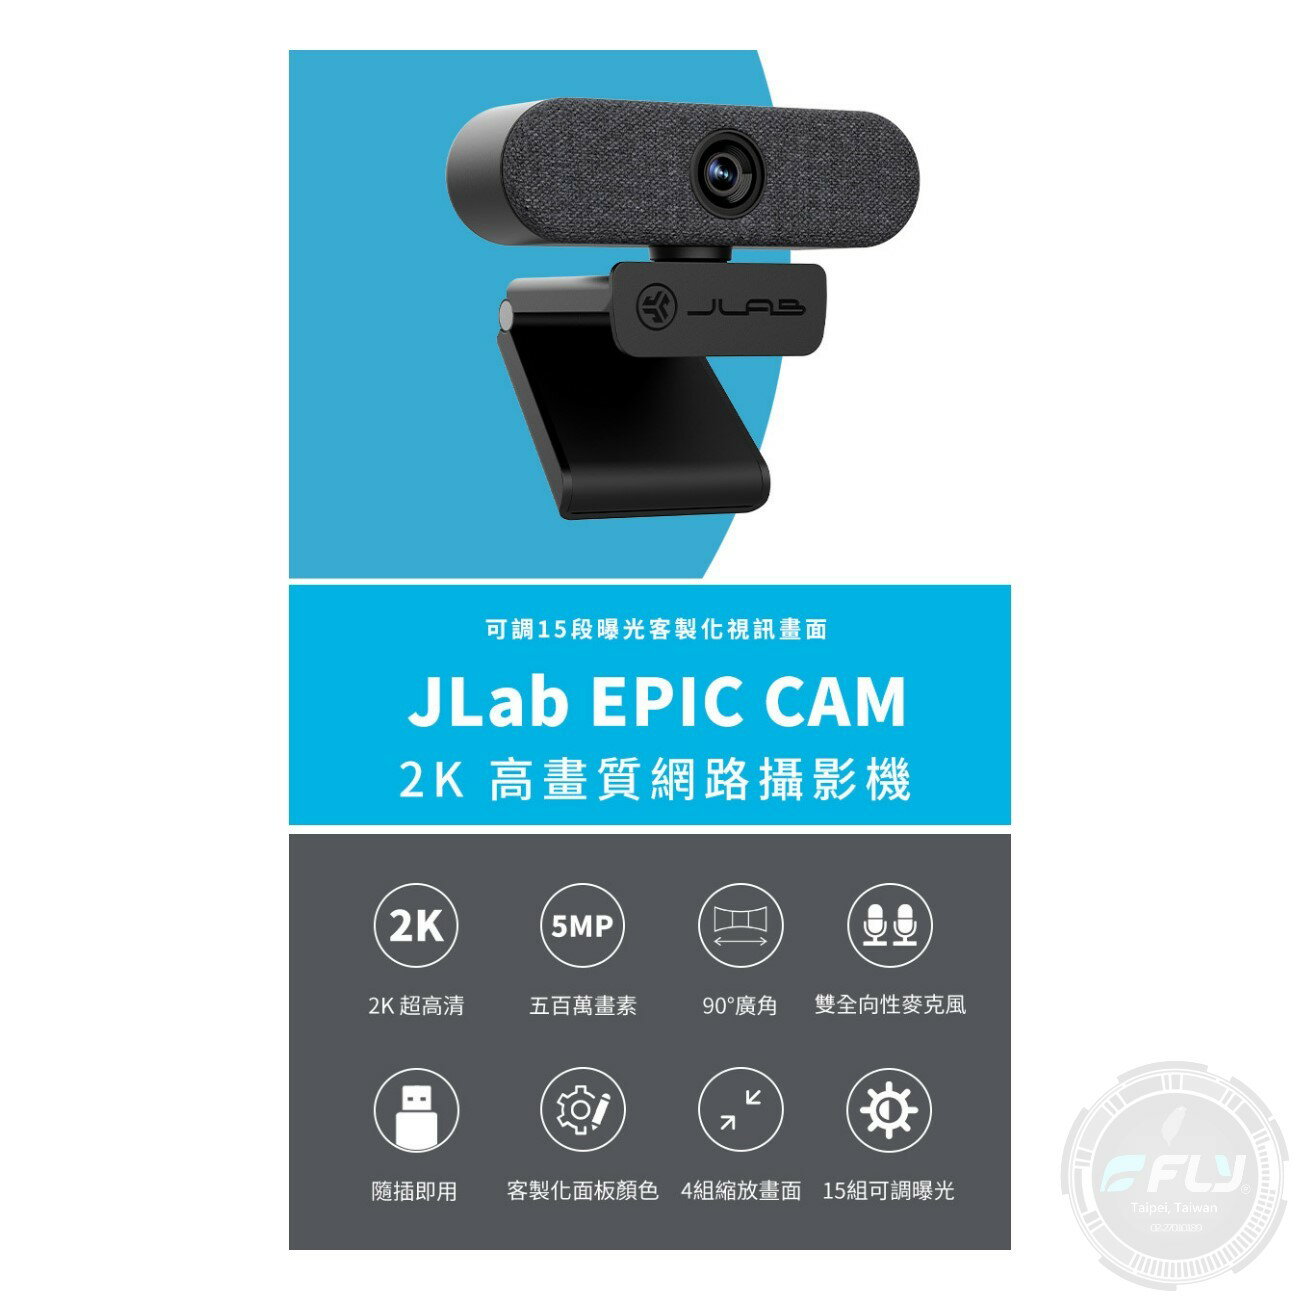 JLab Epic Camera